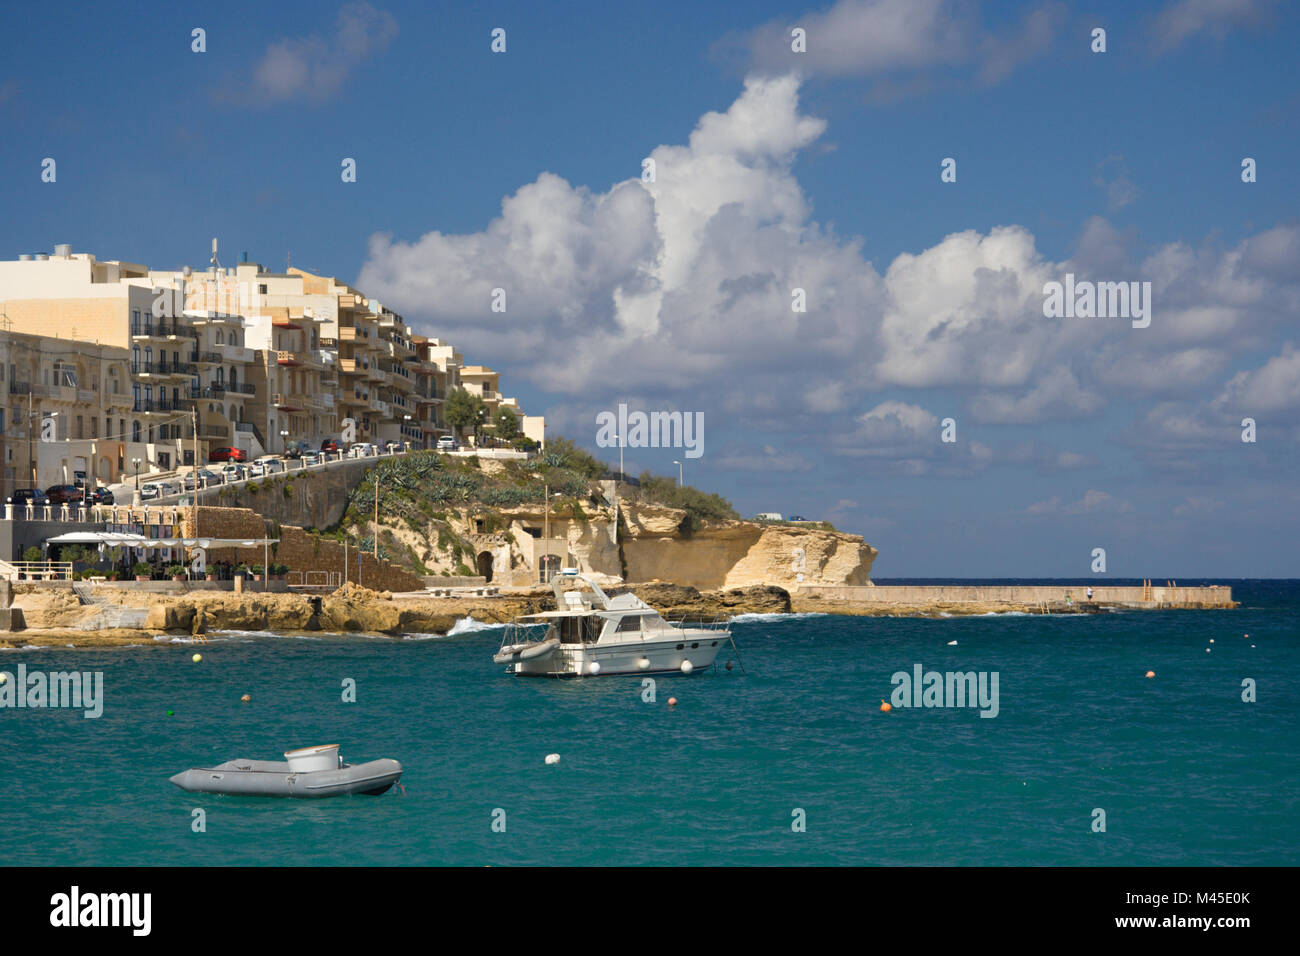 Boats and coastline of the bay of Marsalforn, Gozo. Stock Photo